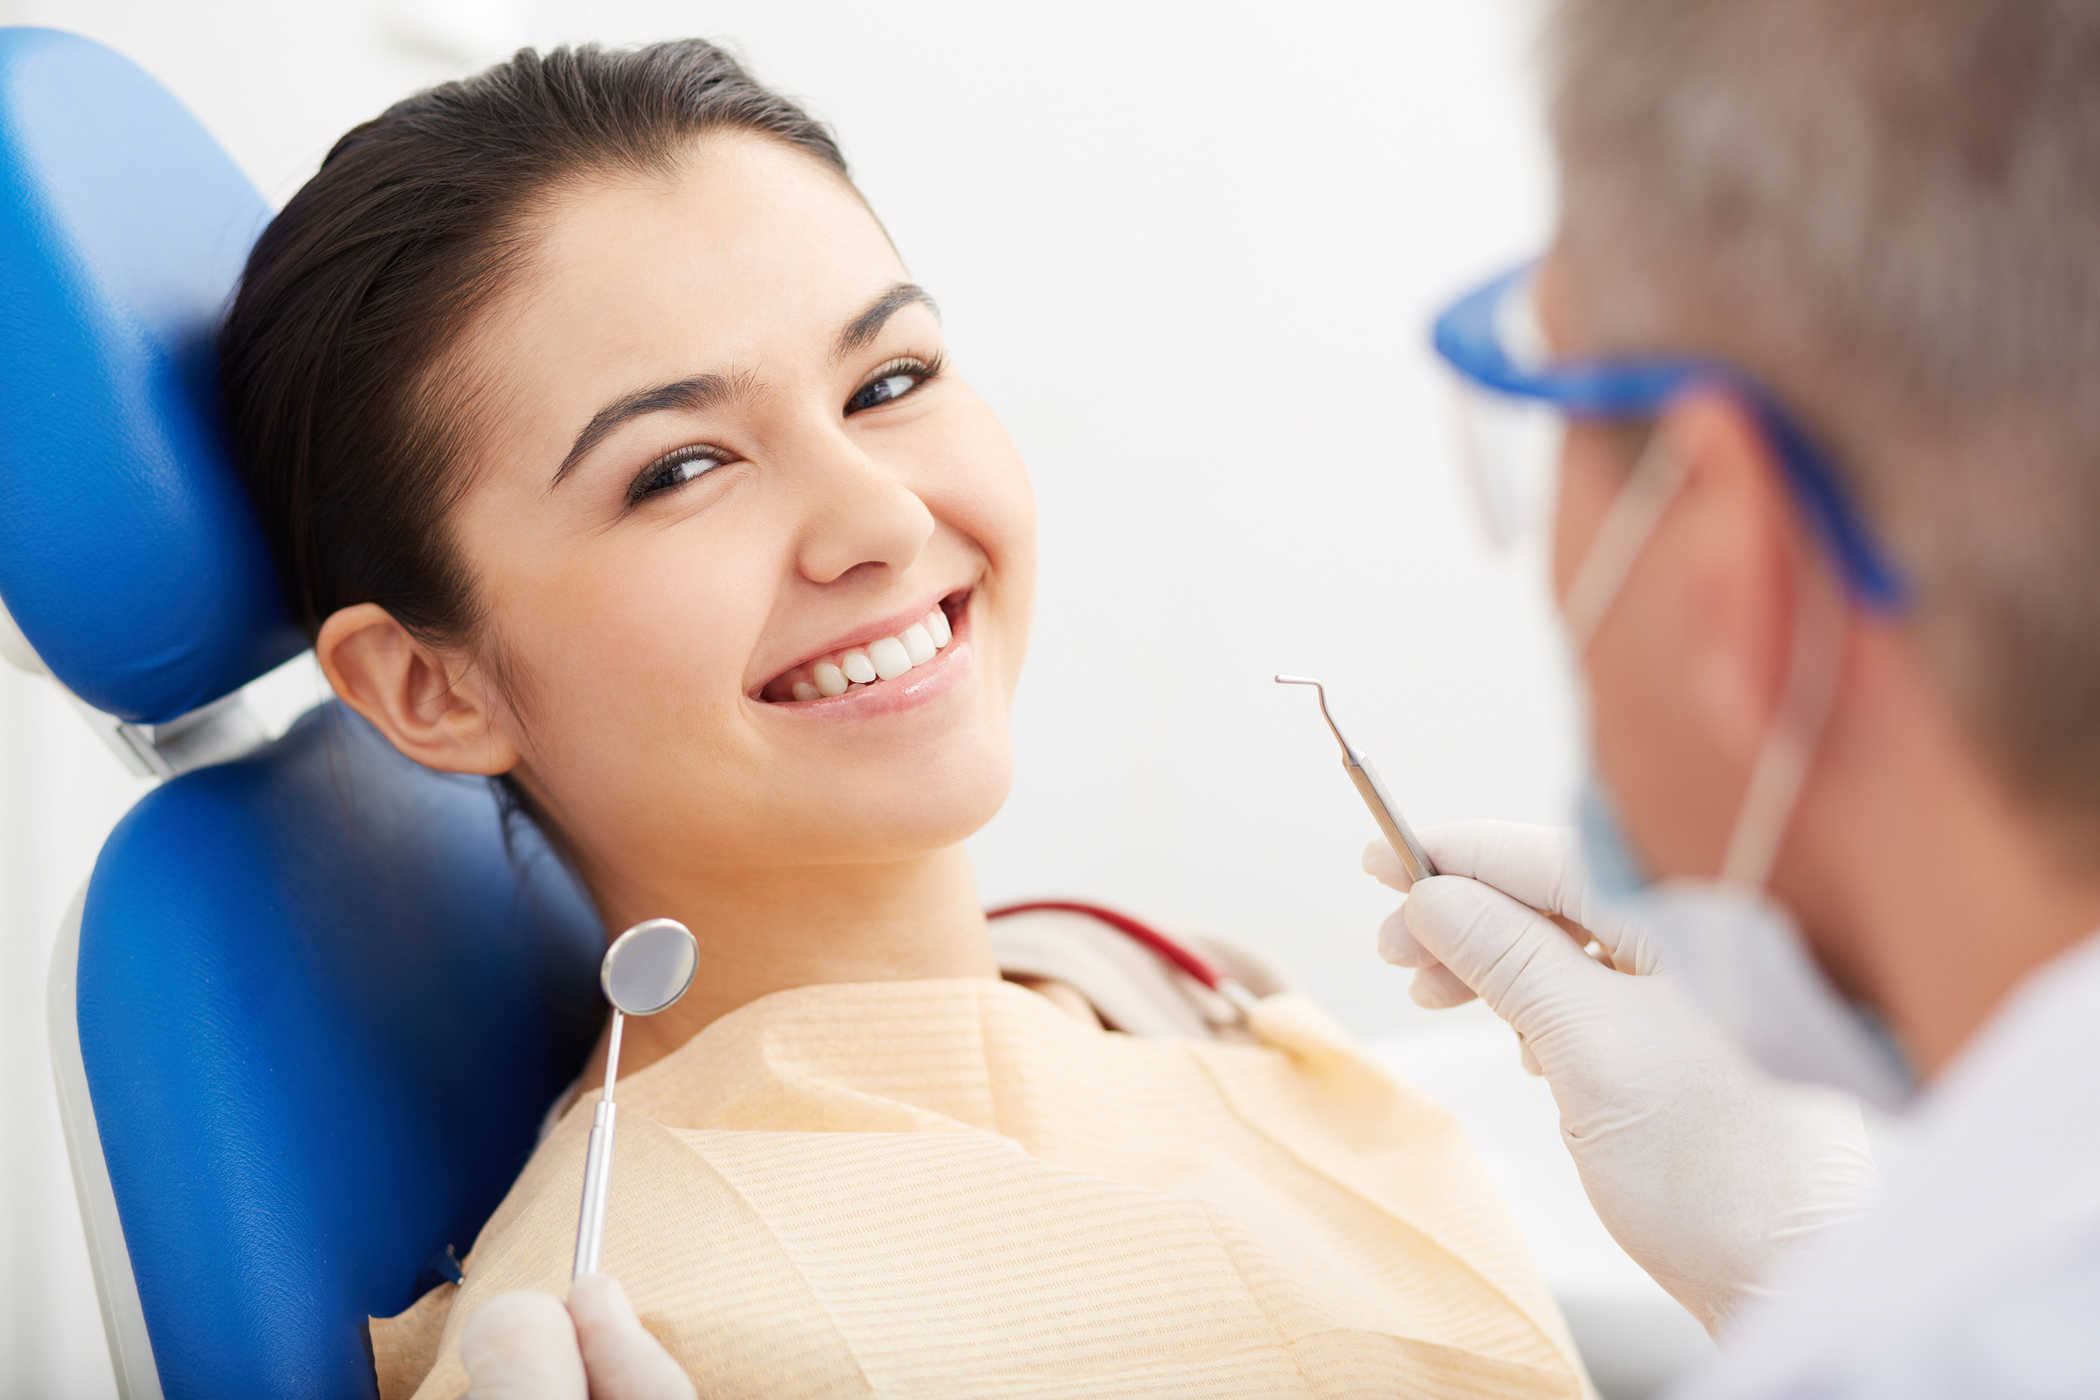 Yang Harus Dipersiapkan Sebelum Menjalani Perawatan Saluran Akar Gigi
(Root Canal)